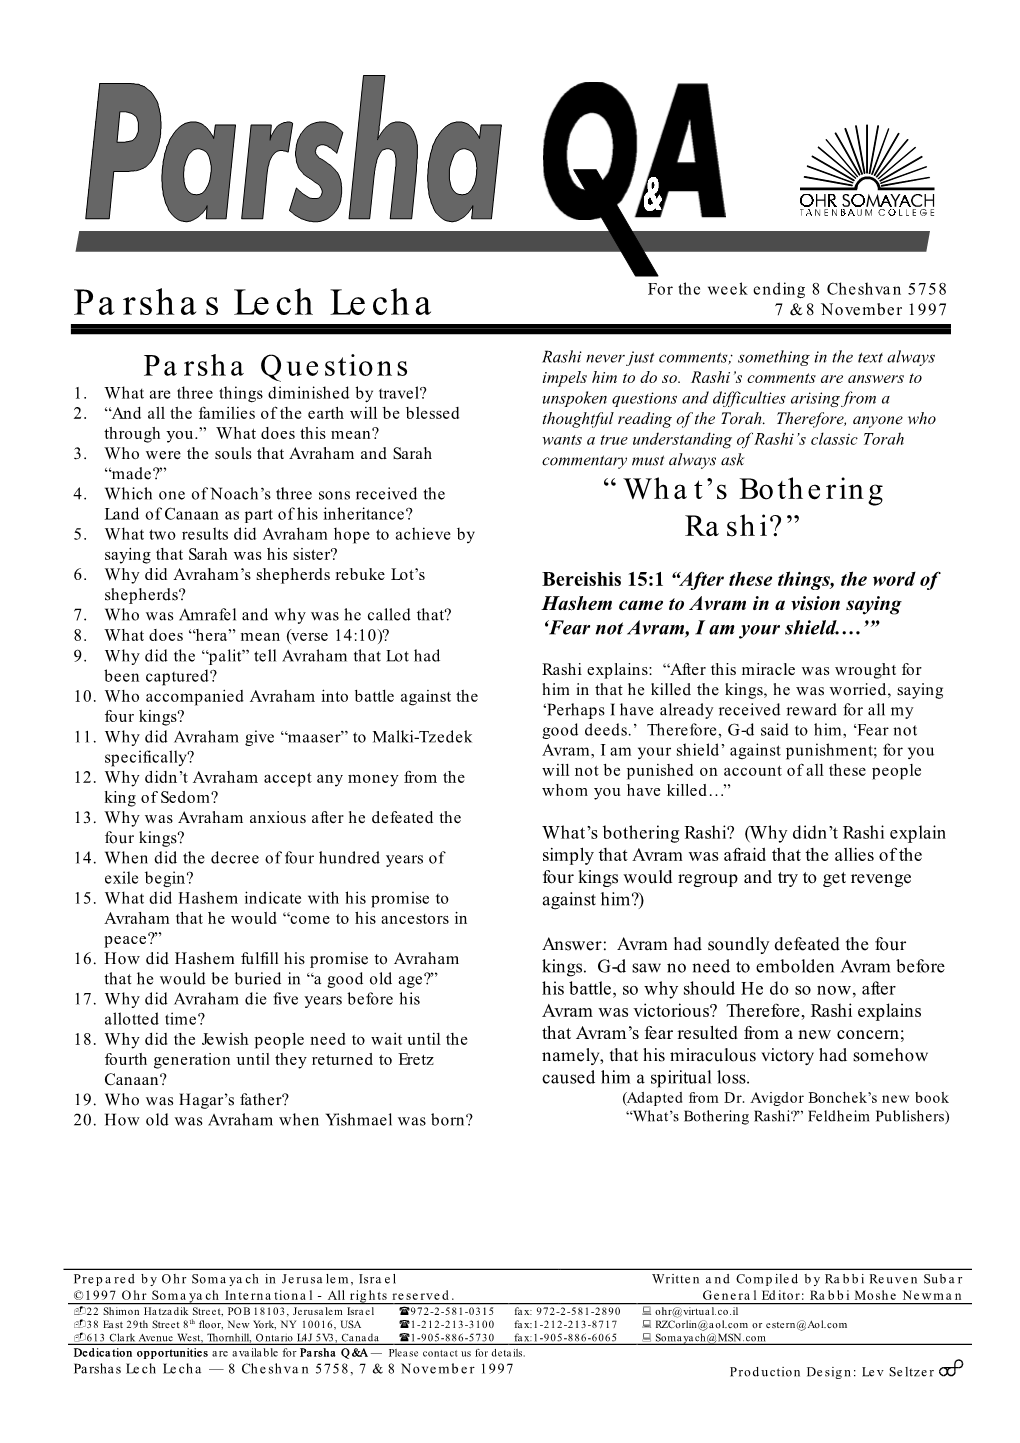 Parshas Lech Lecha 7 & 8 November 1997